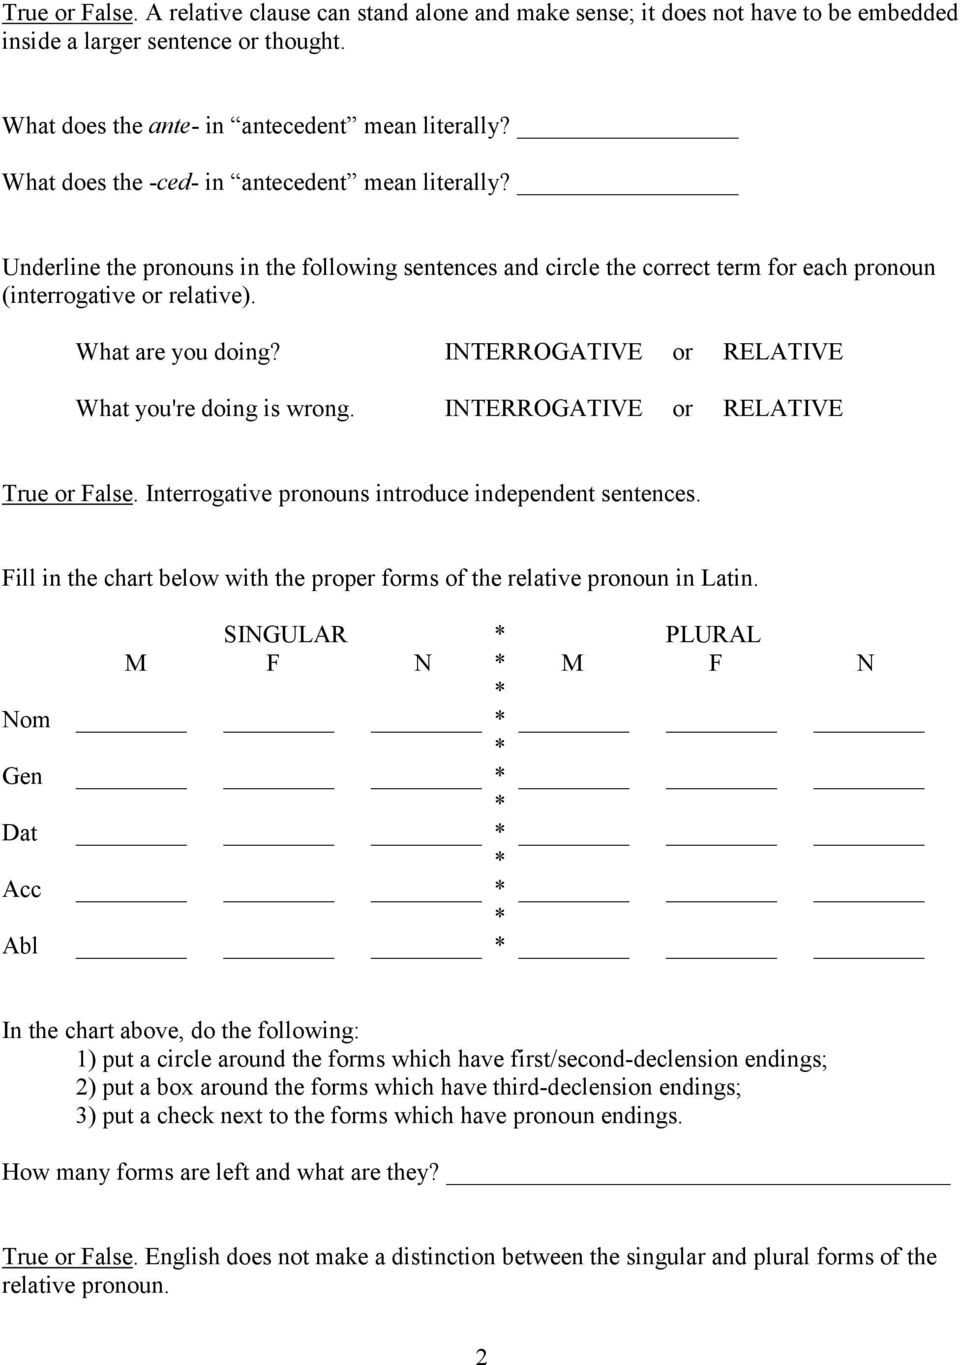 Latin Relative Pronoun Chart